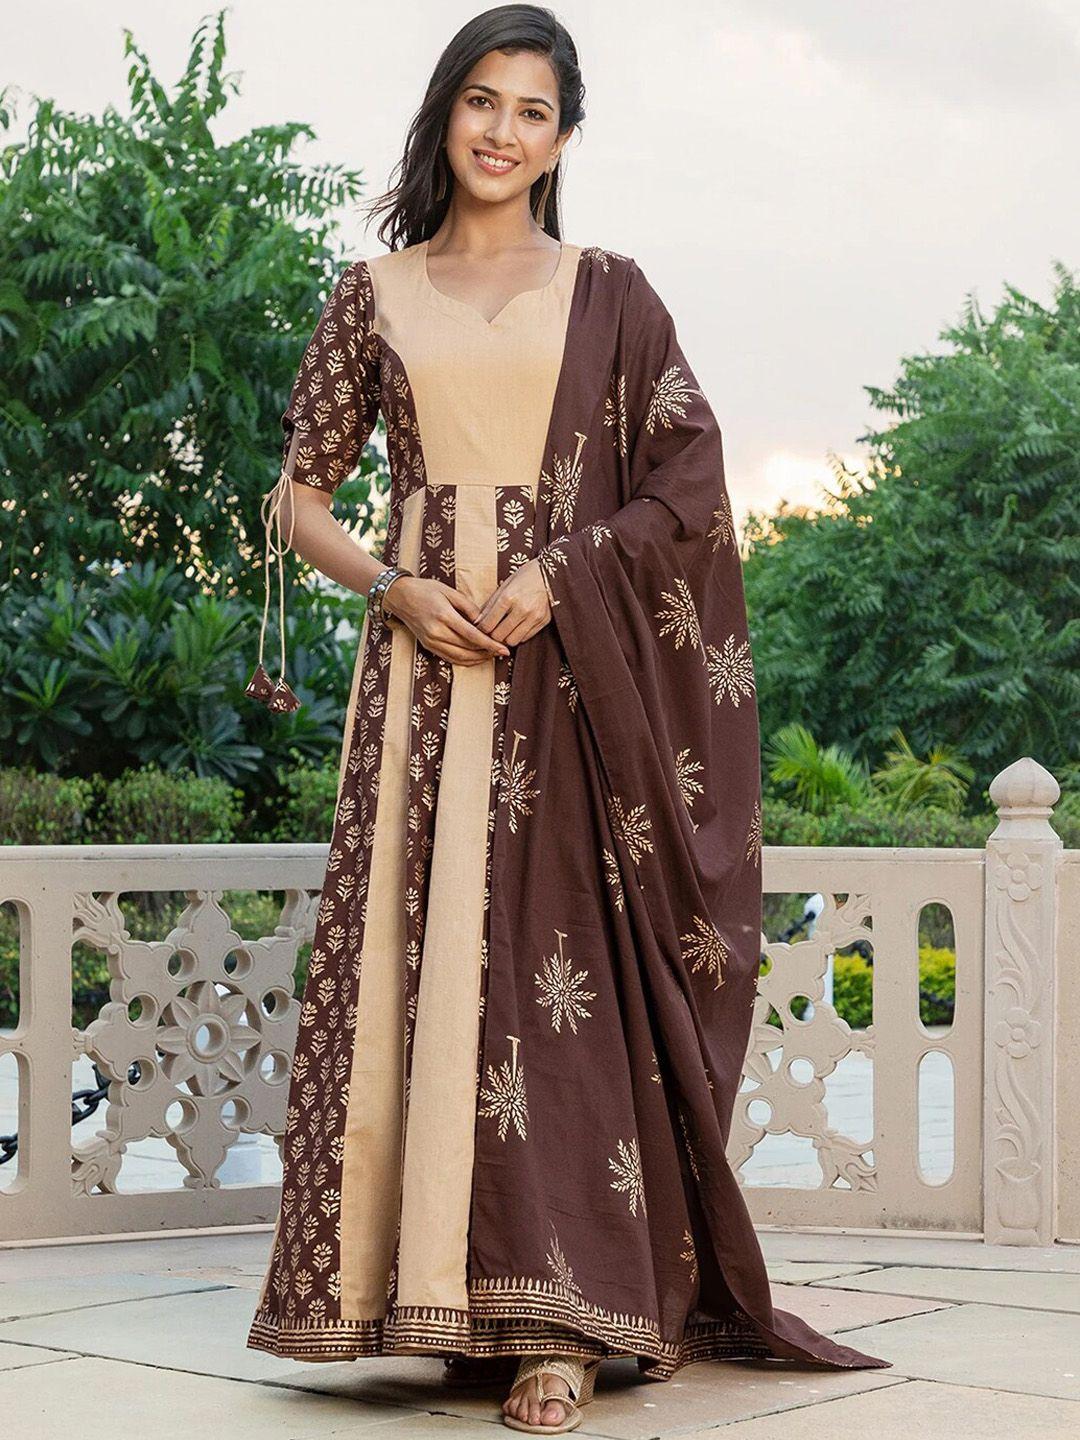 ambraee brown & beige ethnic motifs ethnic maxi dress